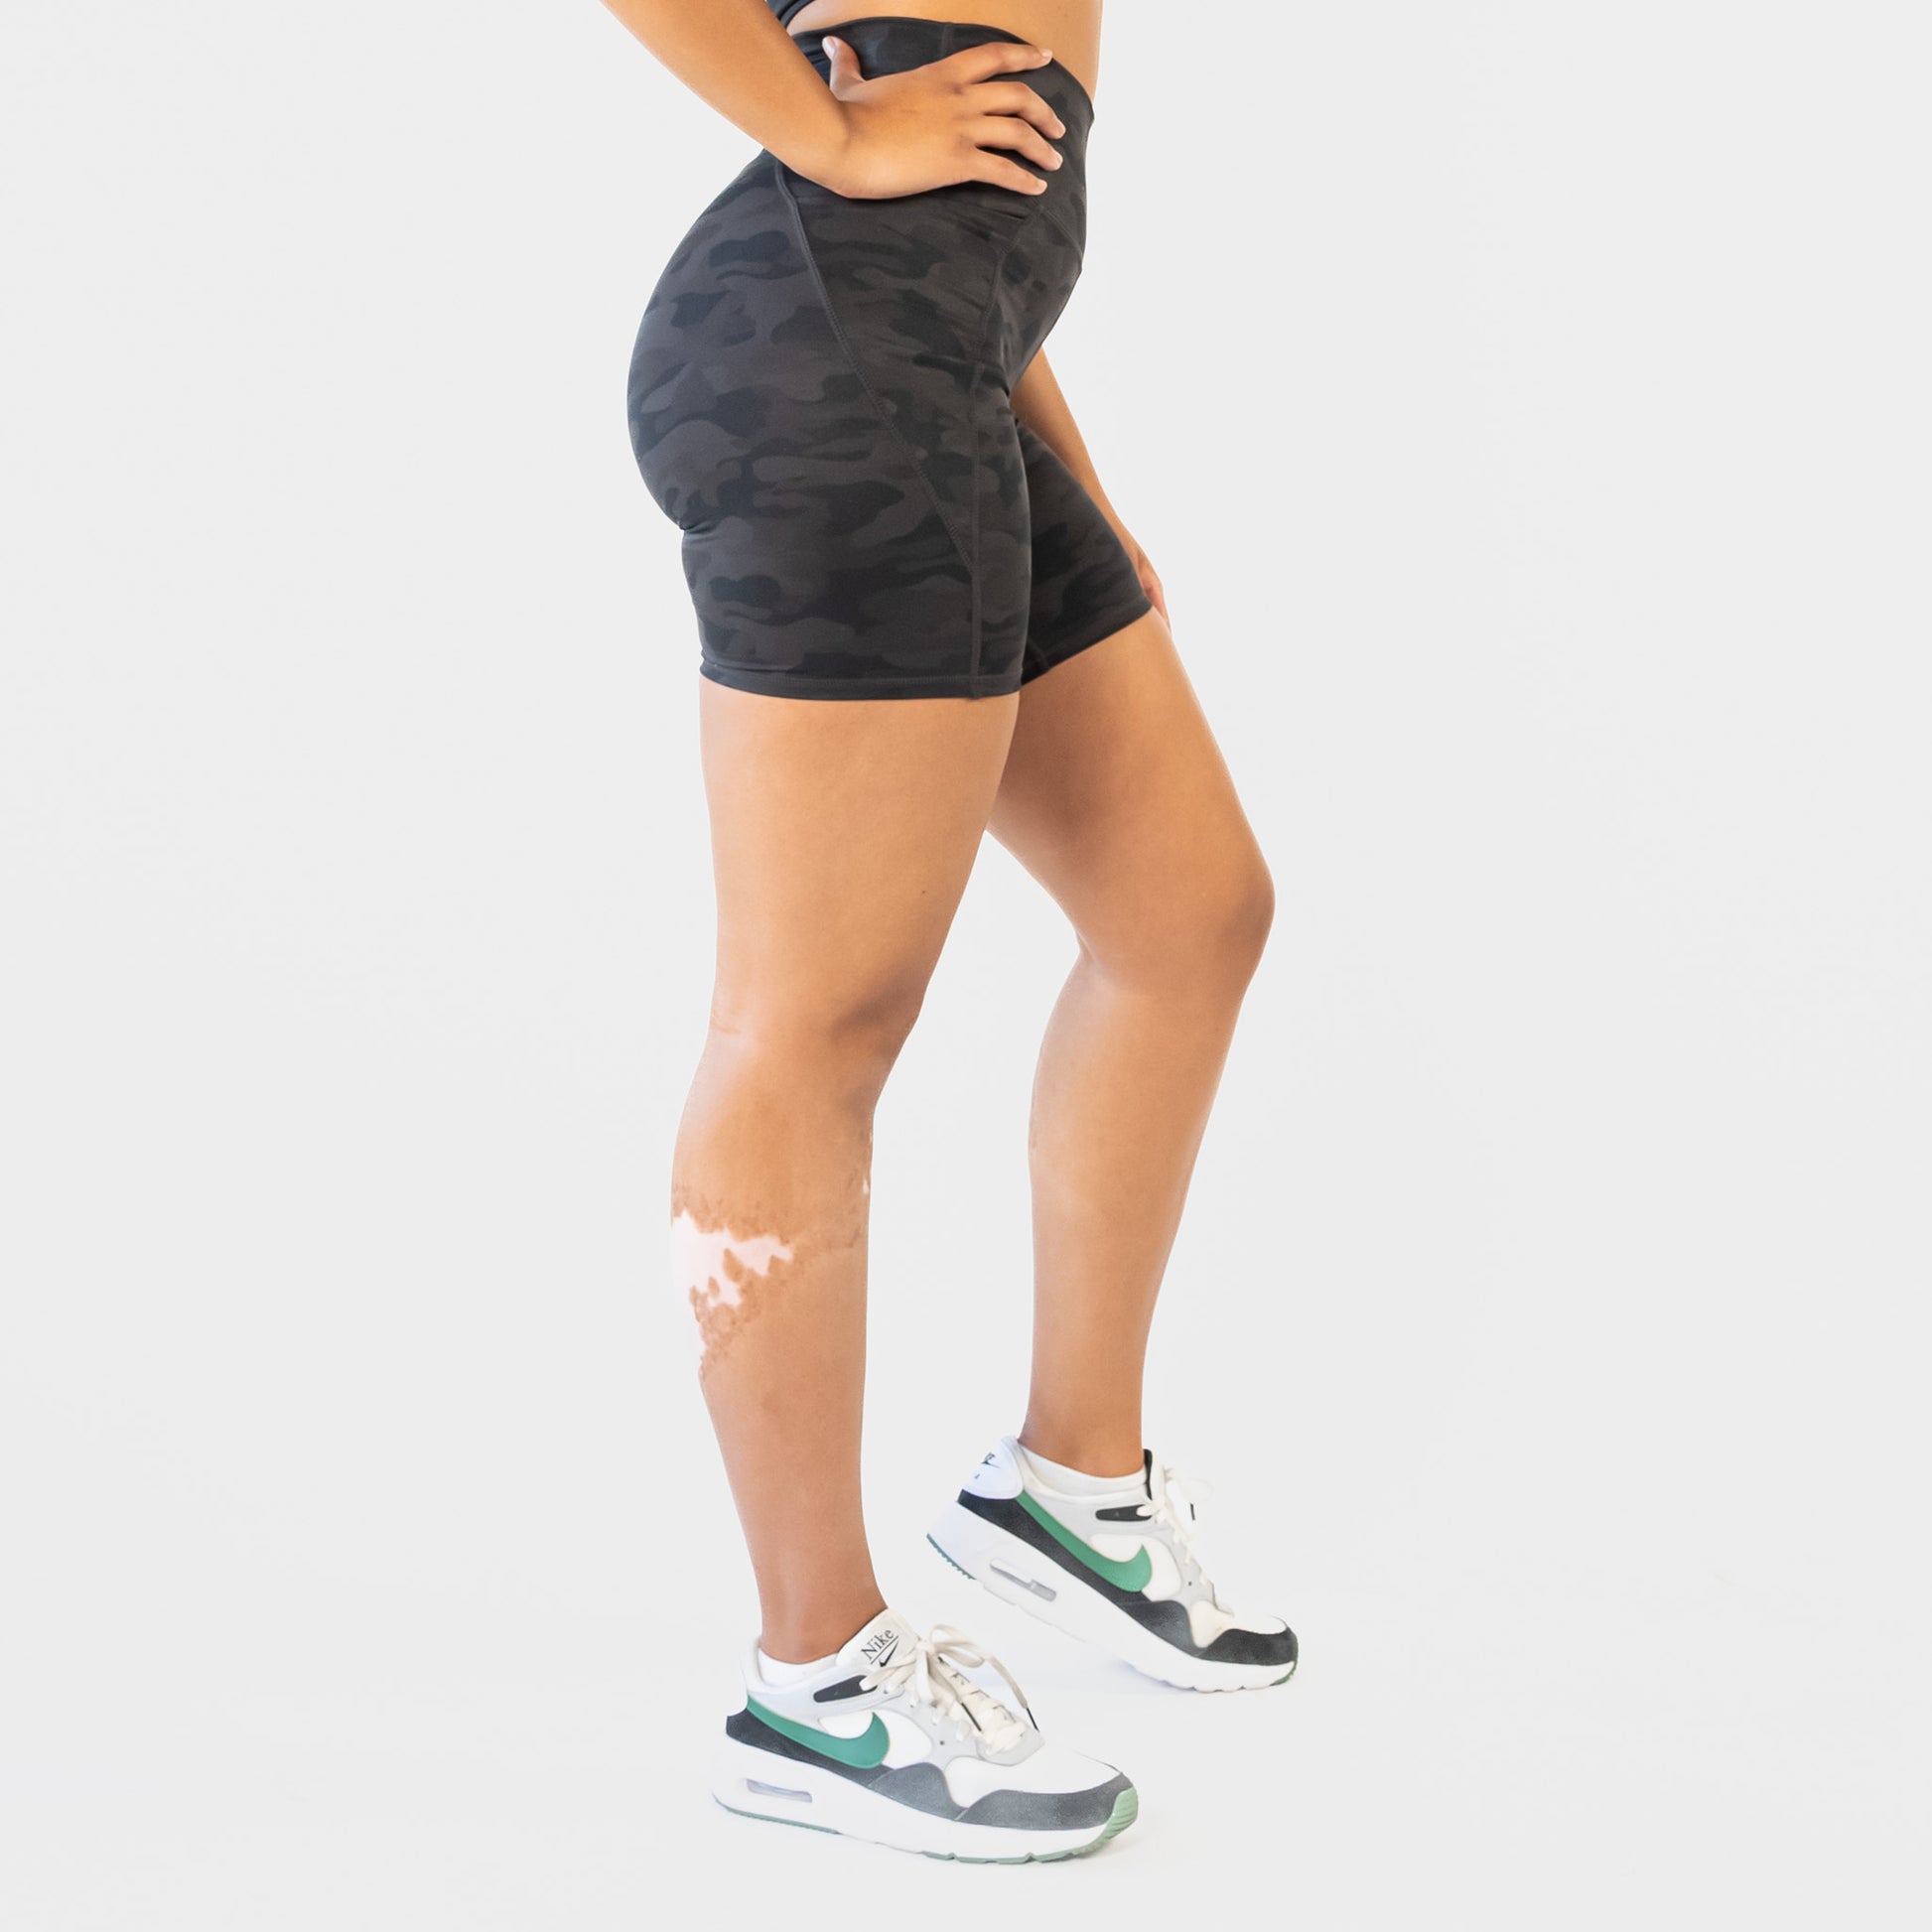 Skin Biker Shorts (8 in. inseam) - Black Camo – Senita Athletics